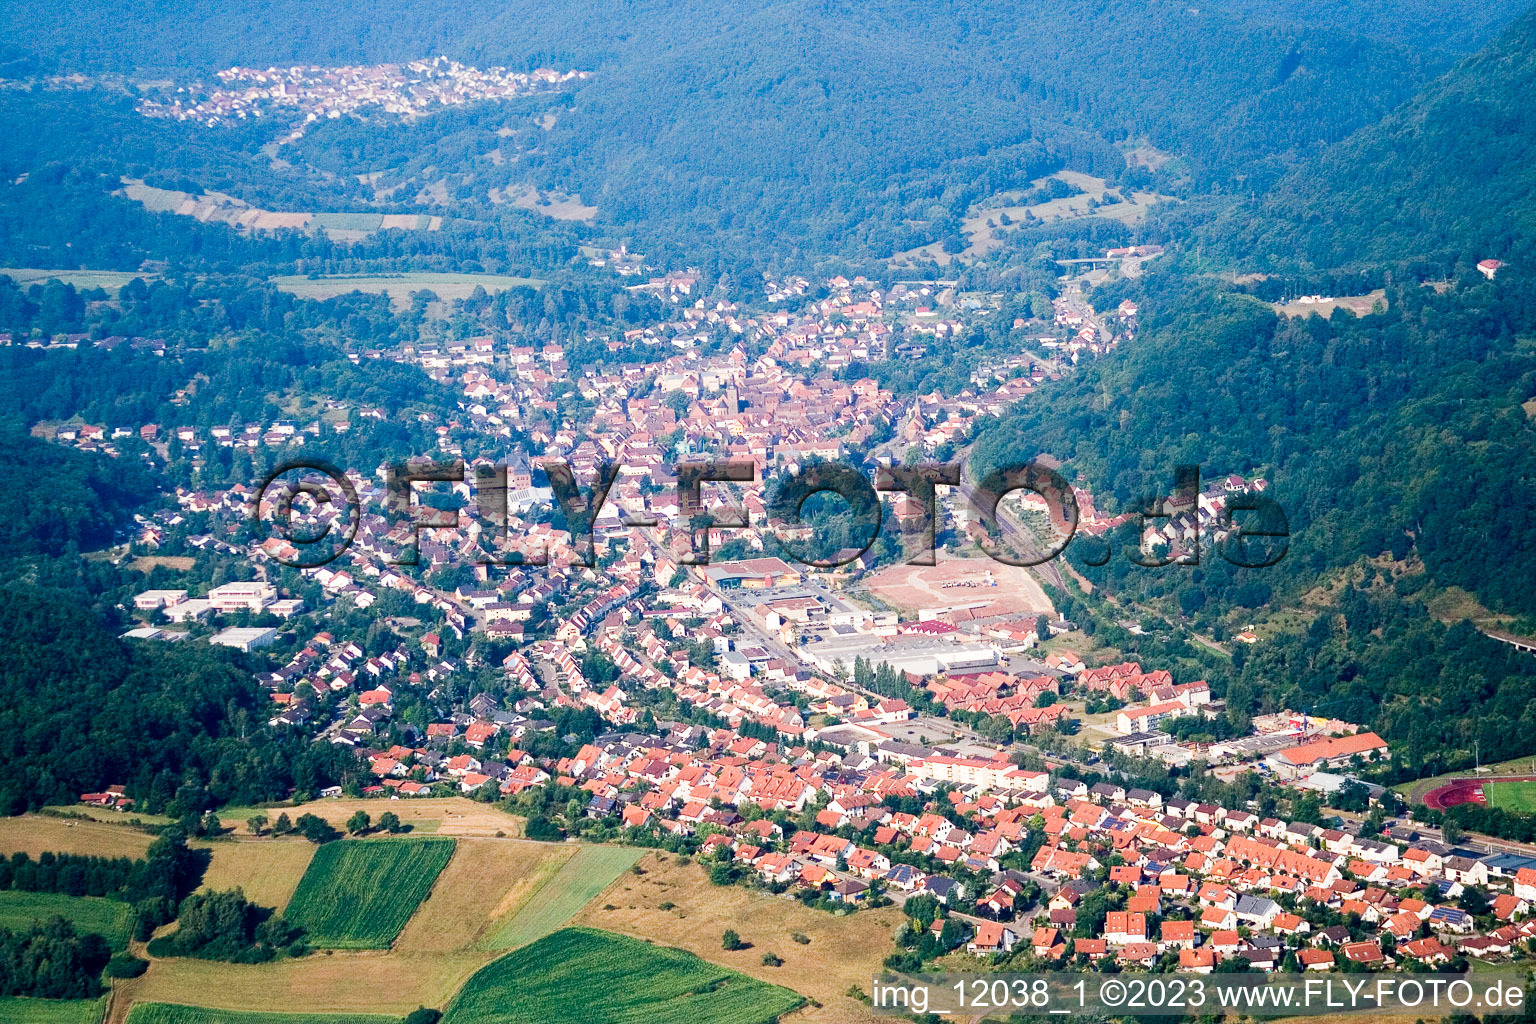 Bird's eye view of Annweiler am Trifels in the state Rhineland-Palatinate, Germany